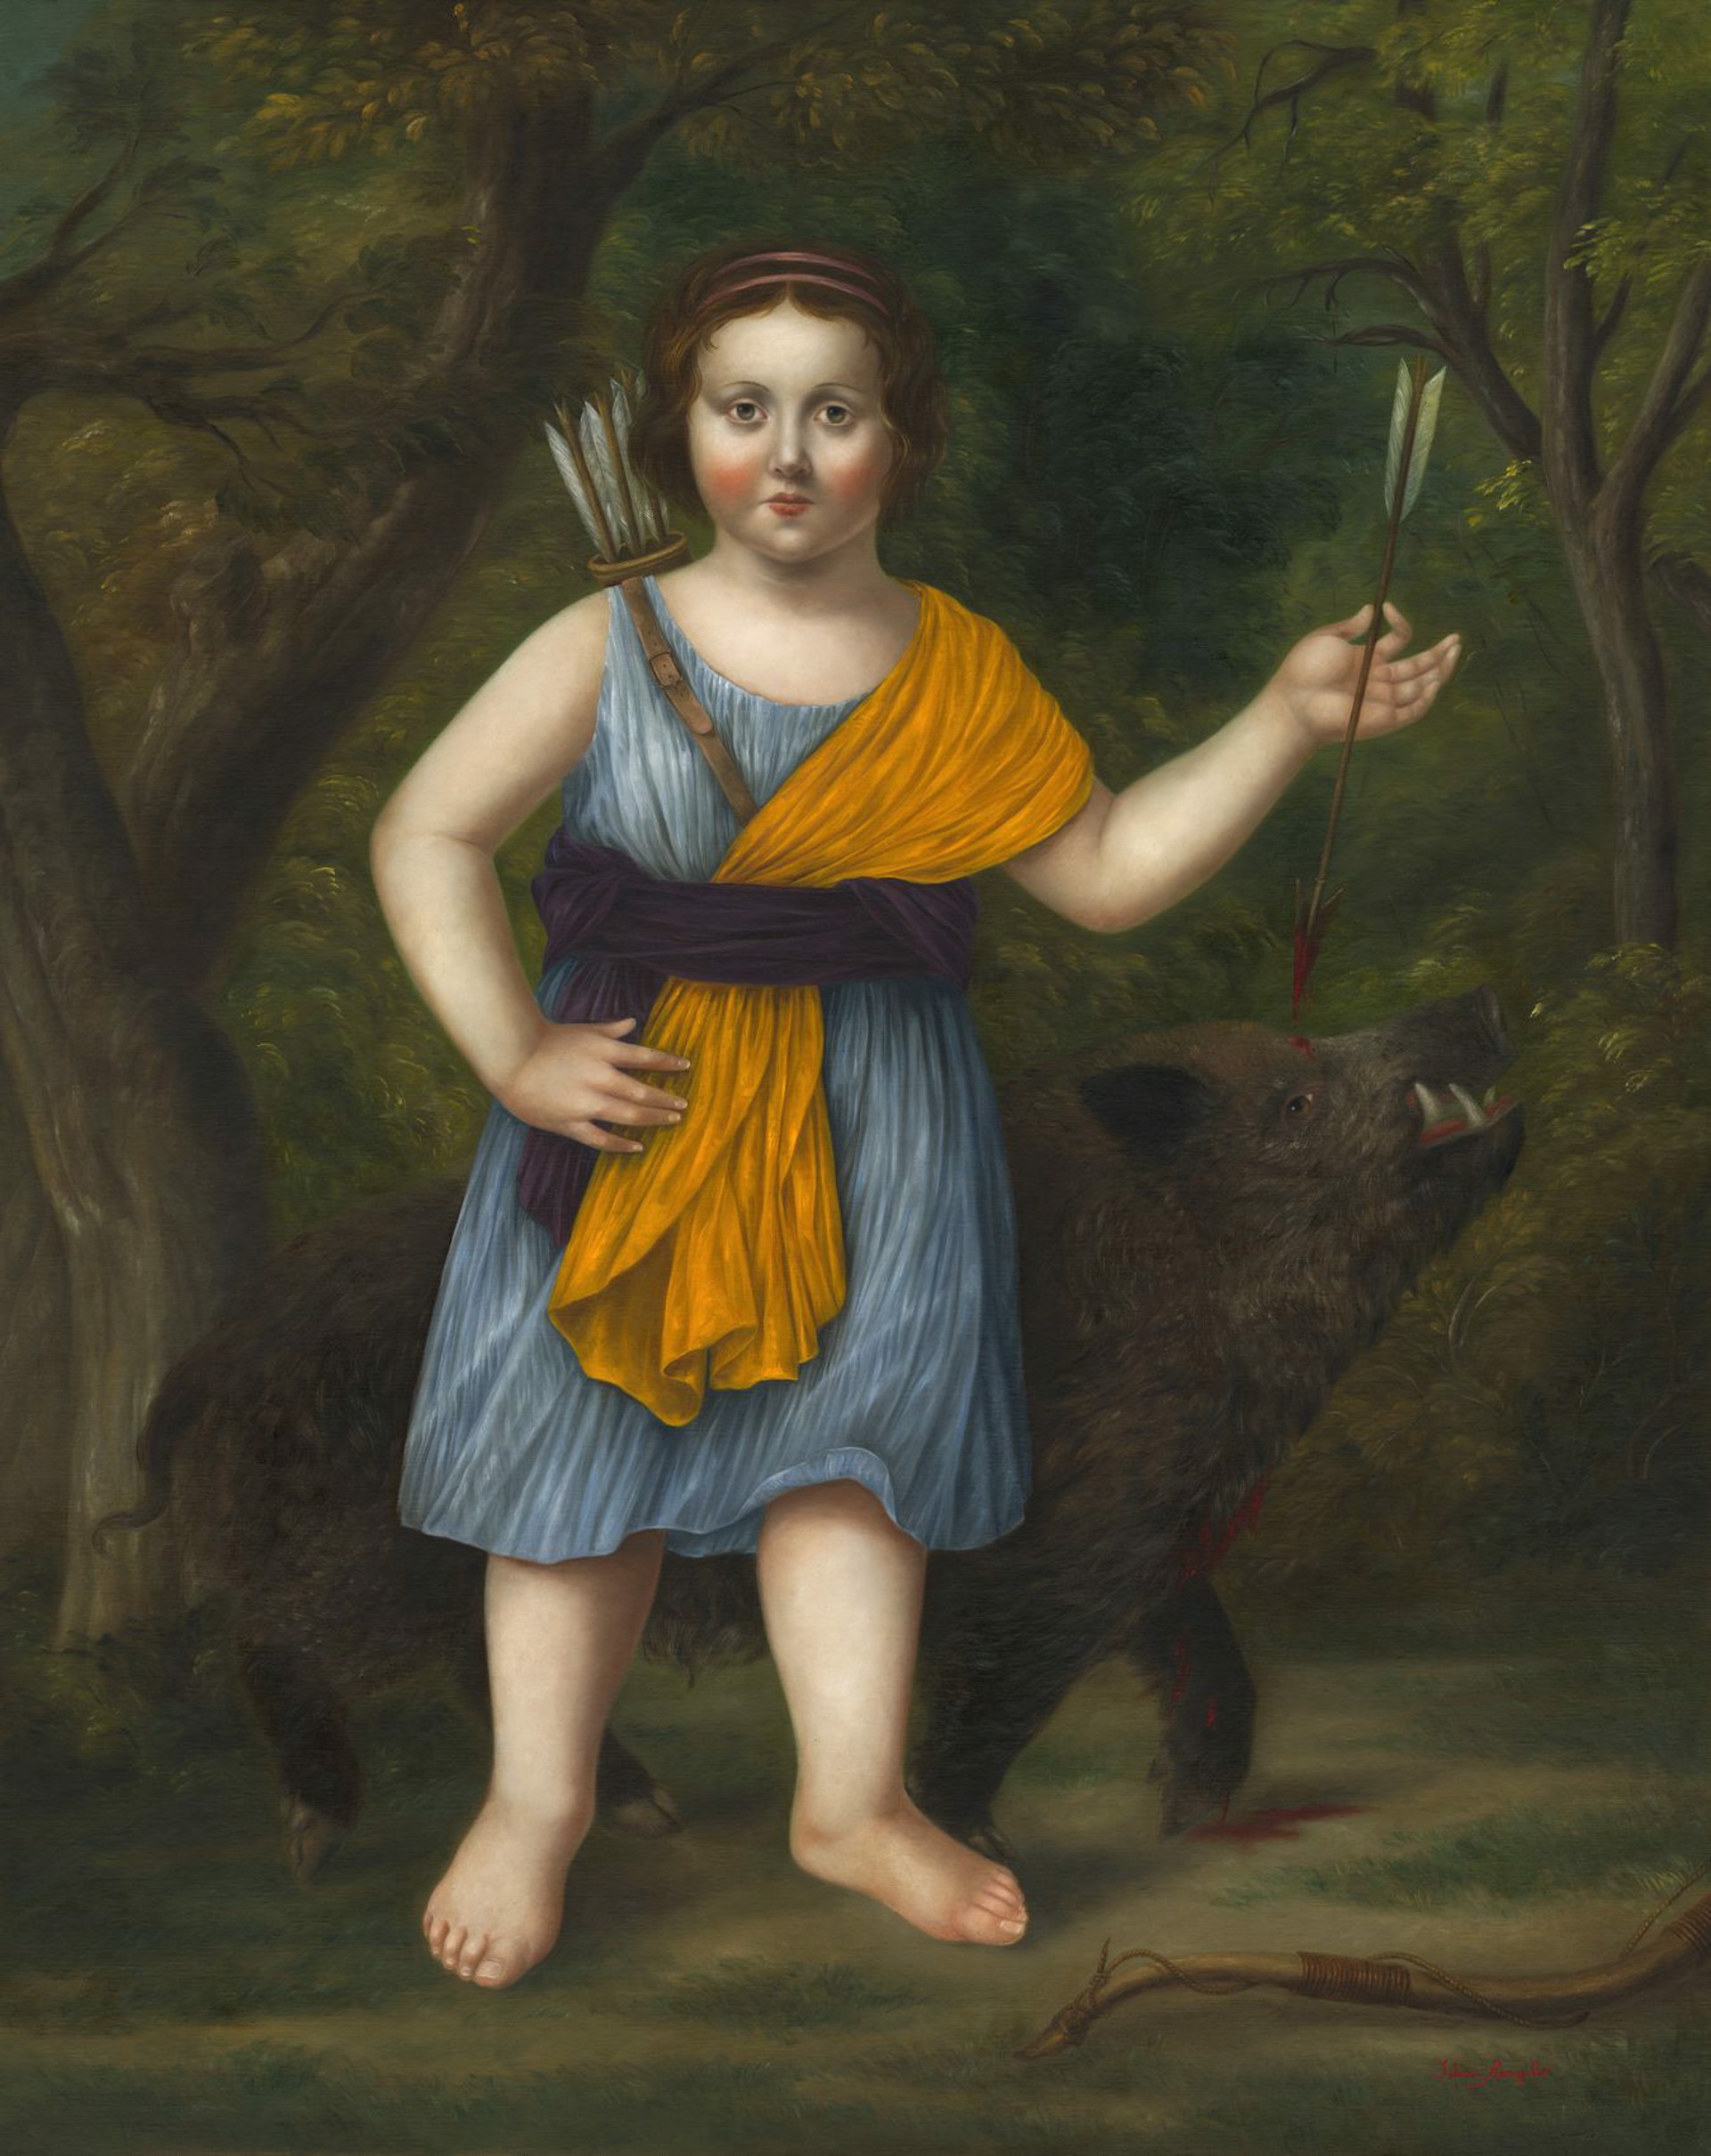 Atalanta and the Boar by Fatima Ronquillo